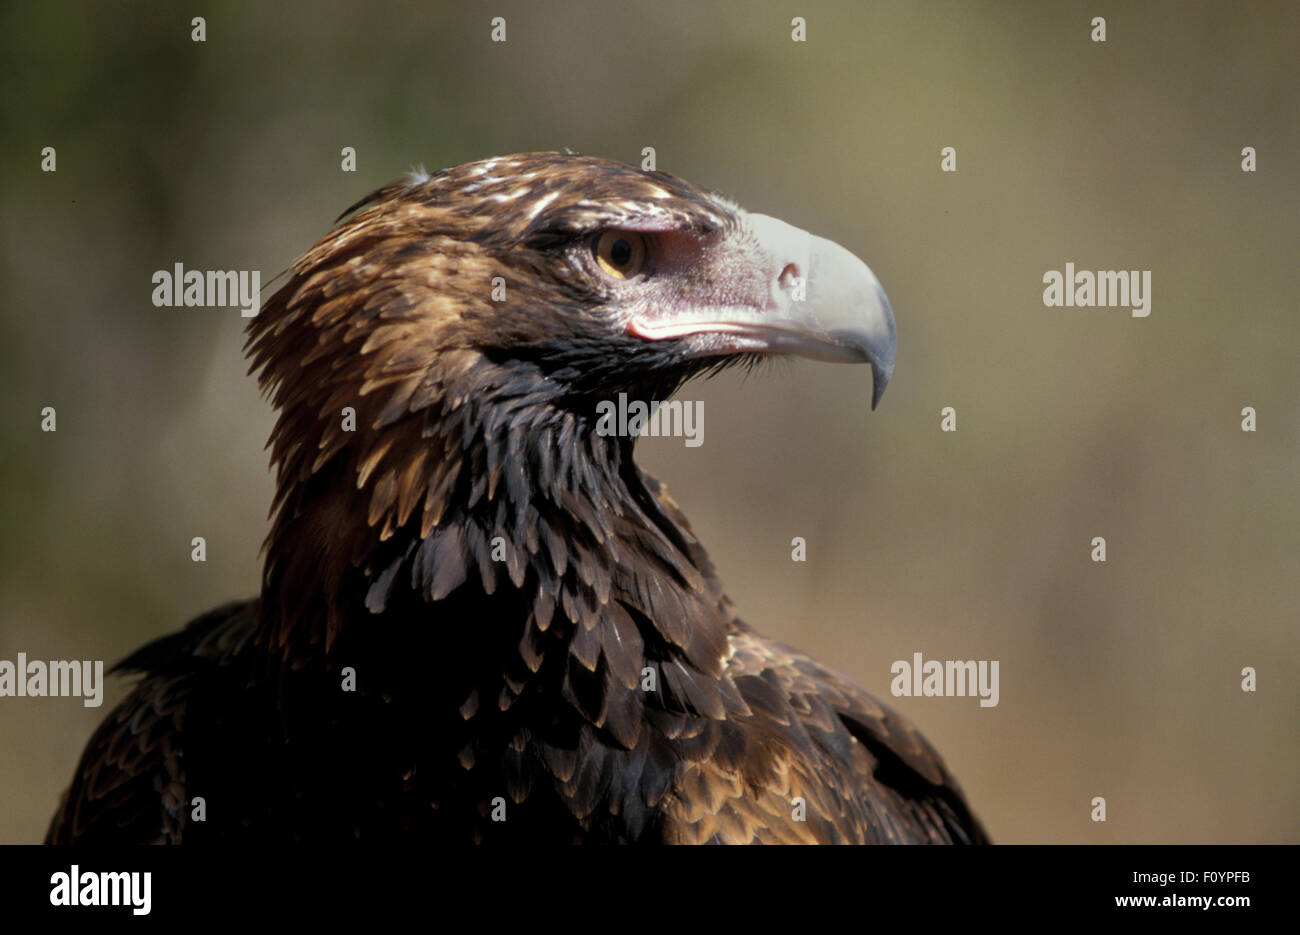 Head shot of an Australian Wedge-tailed eagle (Aquila audax) Western Australia. Stock Photo